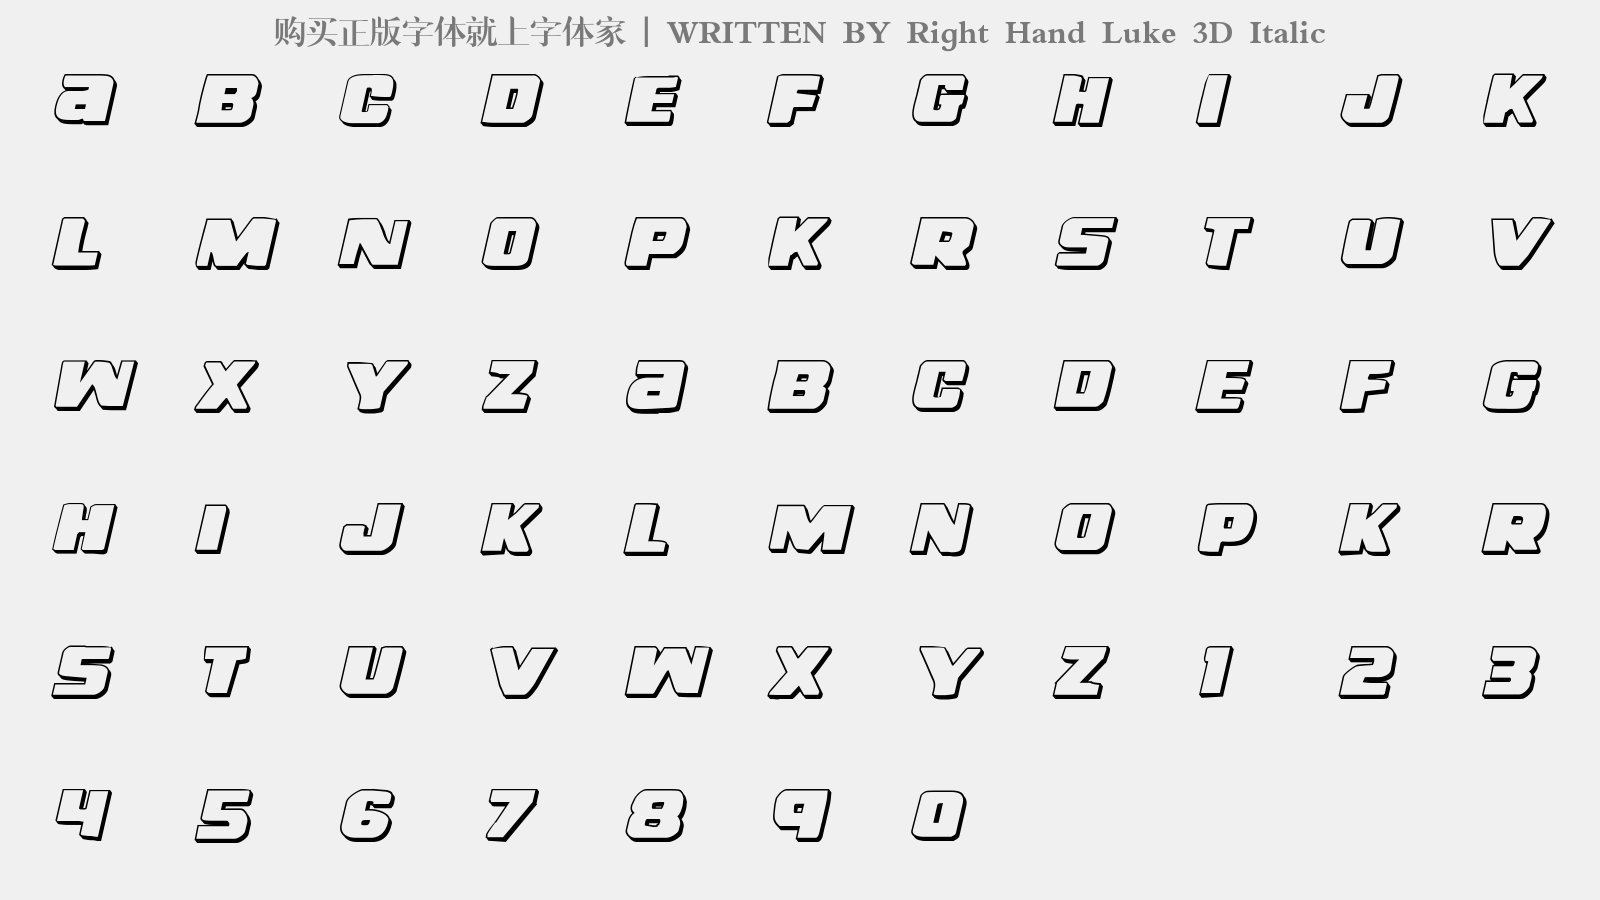 Right Hand Luke 3D Italic - 大写字母/小写字母/数字